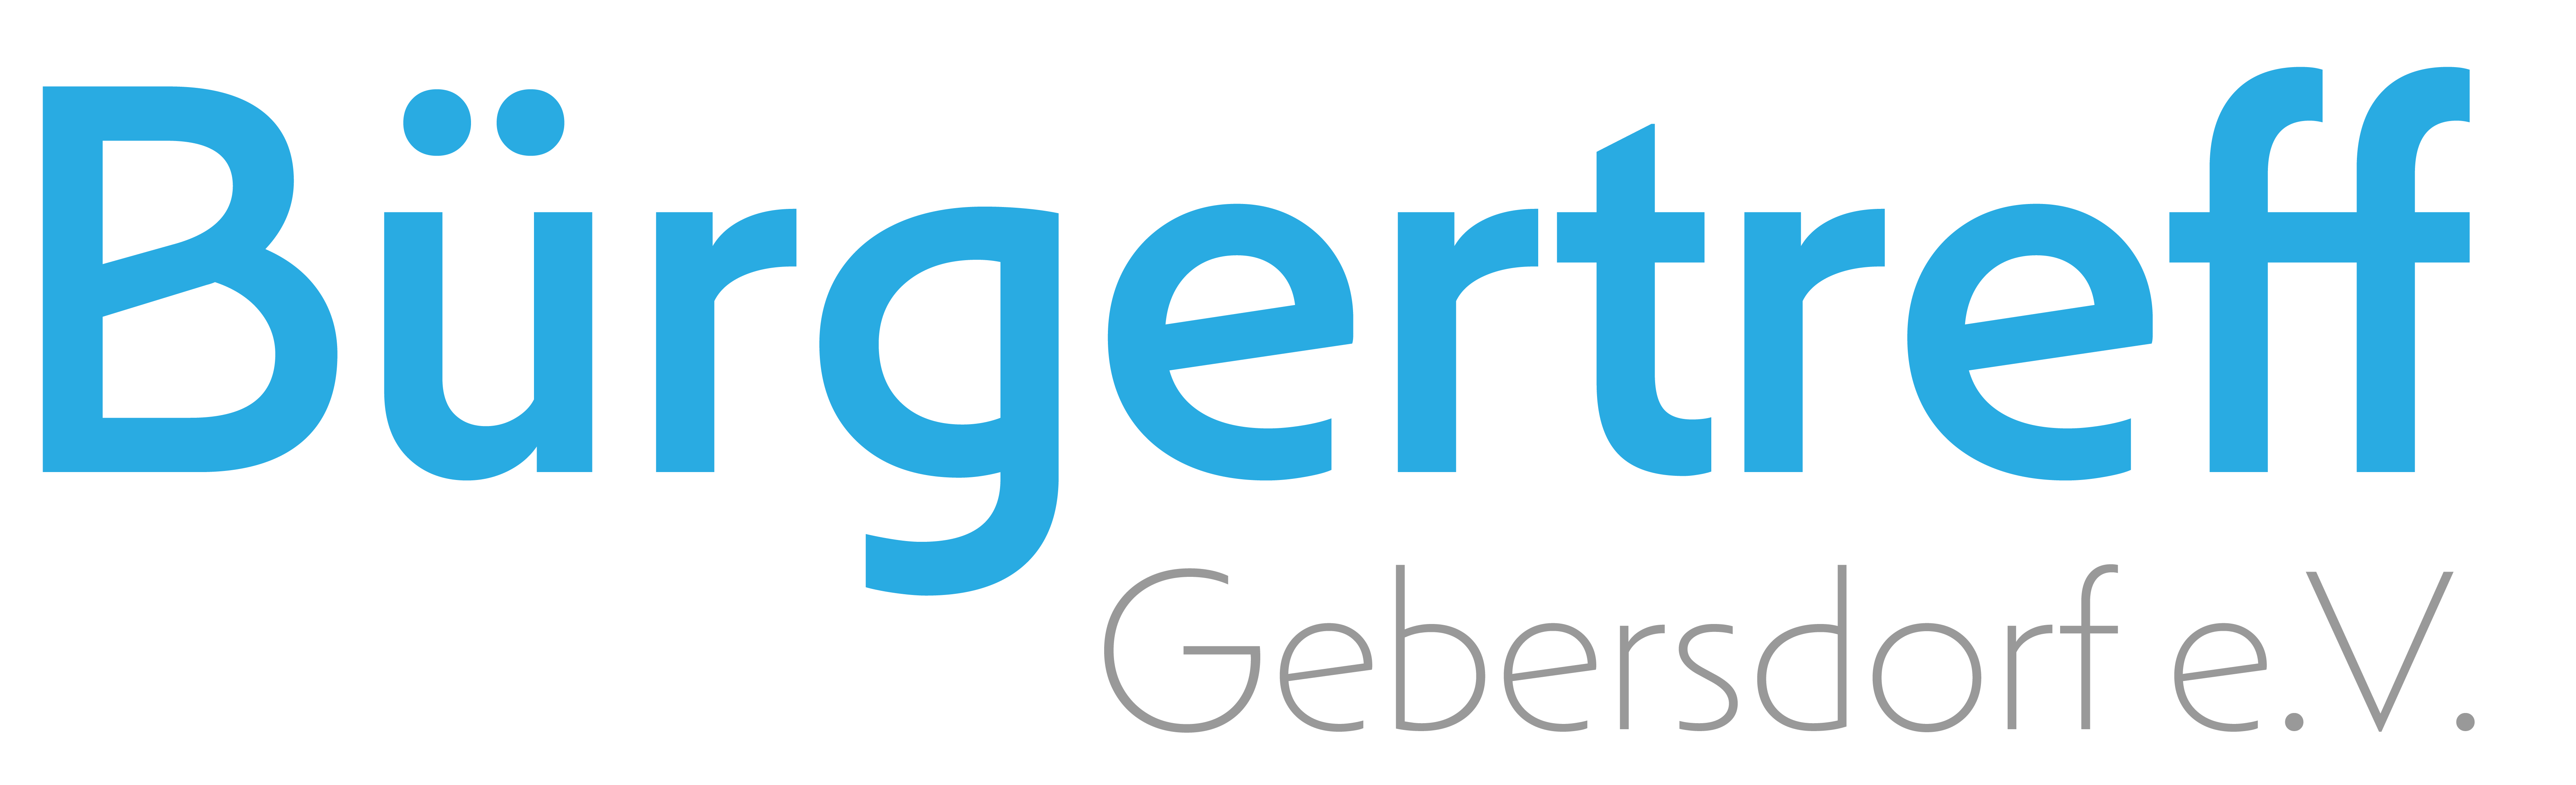 Bürgertreff Gebersdorf e.V. Logo